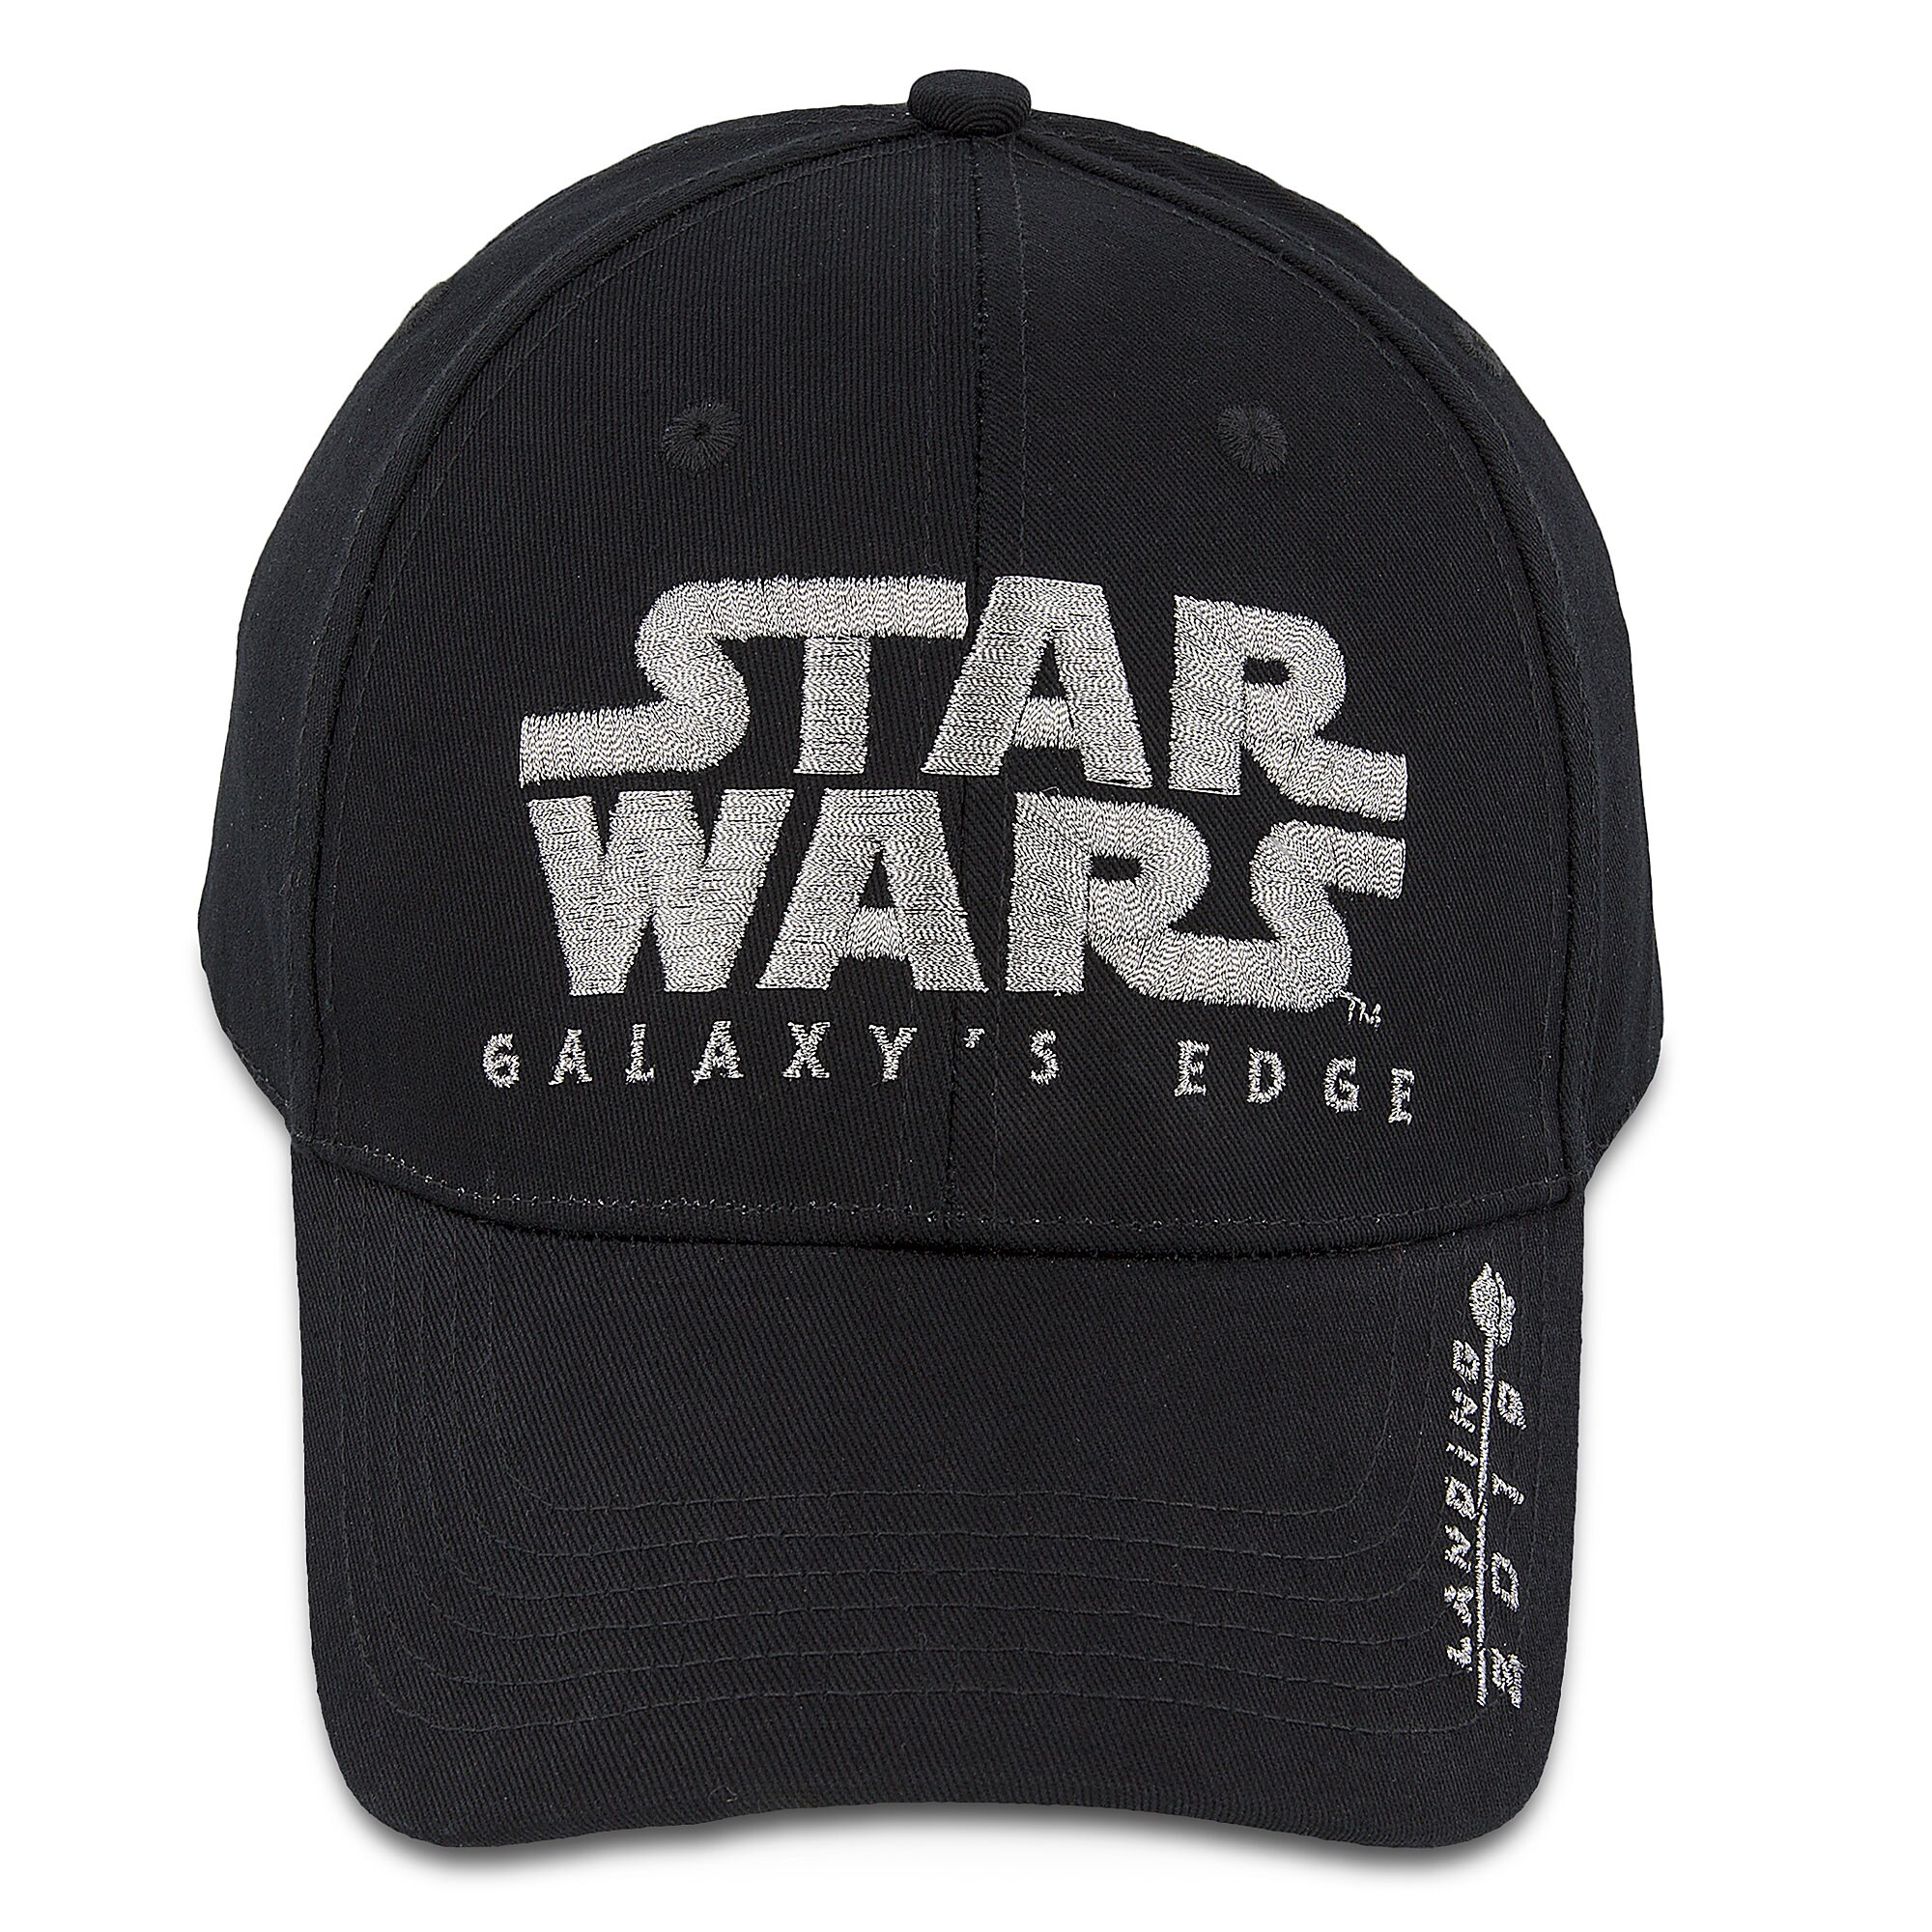 Star Wars: Galaxy's Edge Baseball Cap for Adults